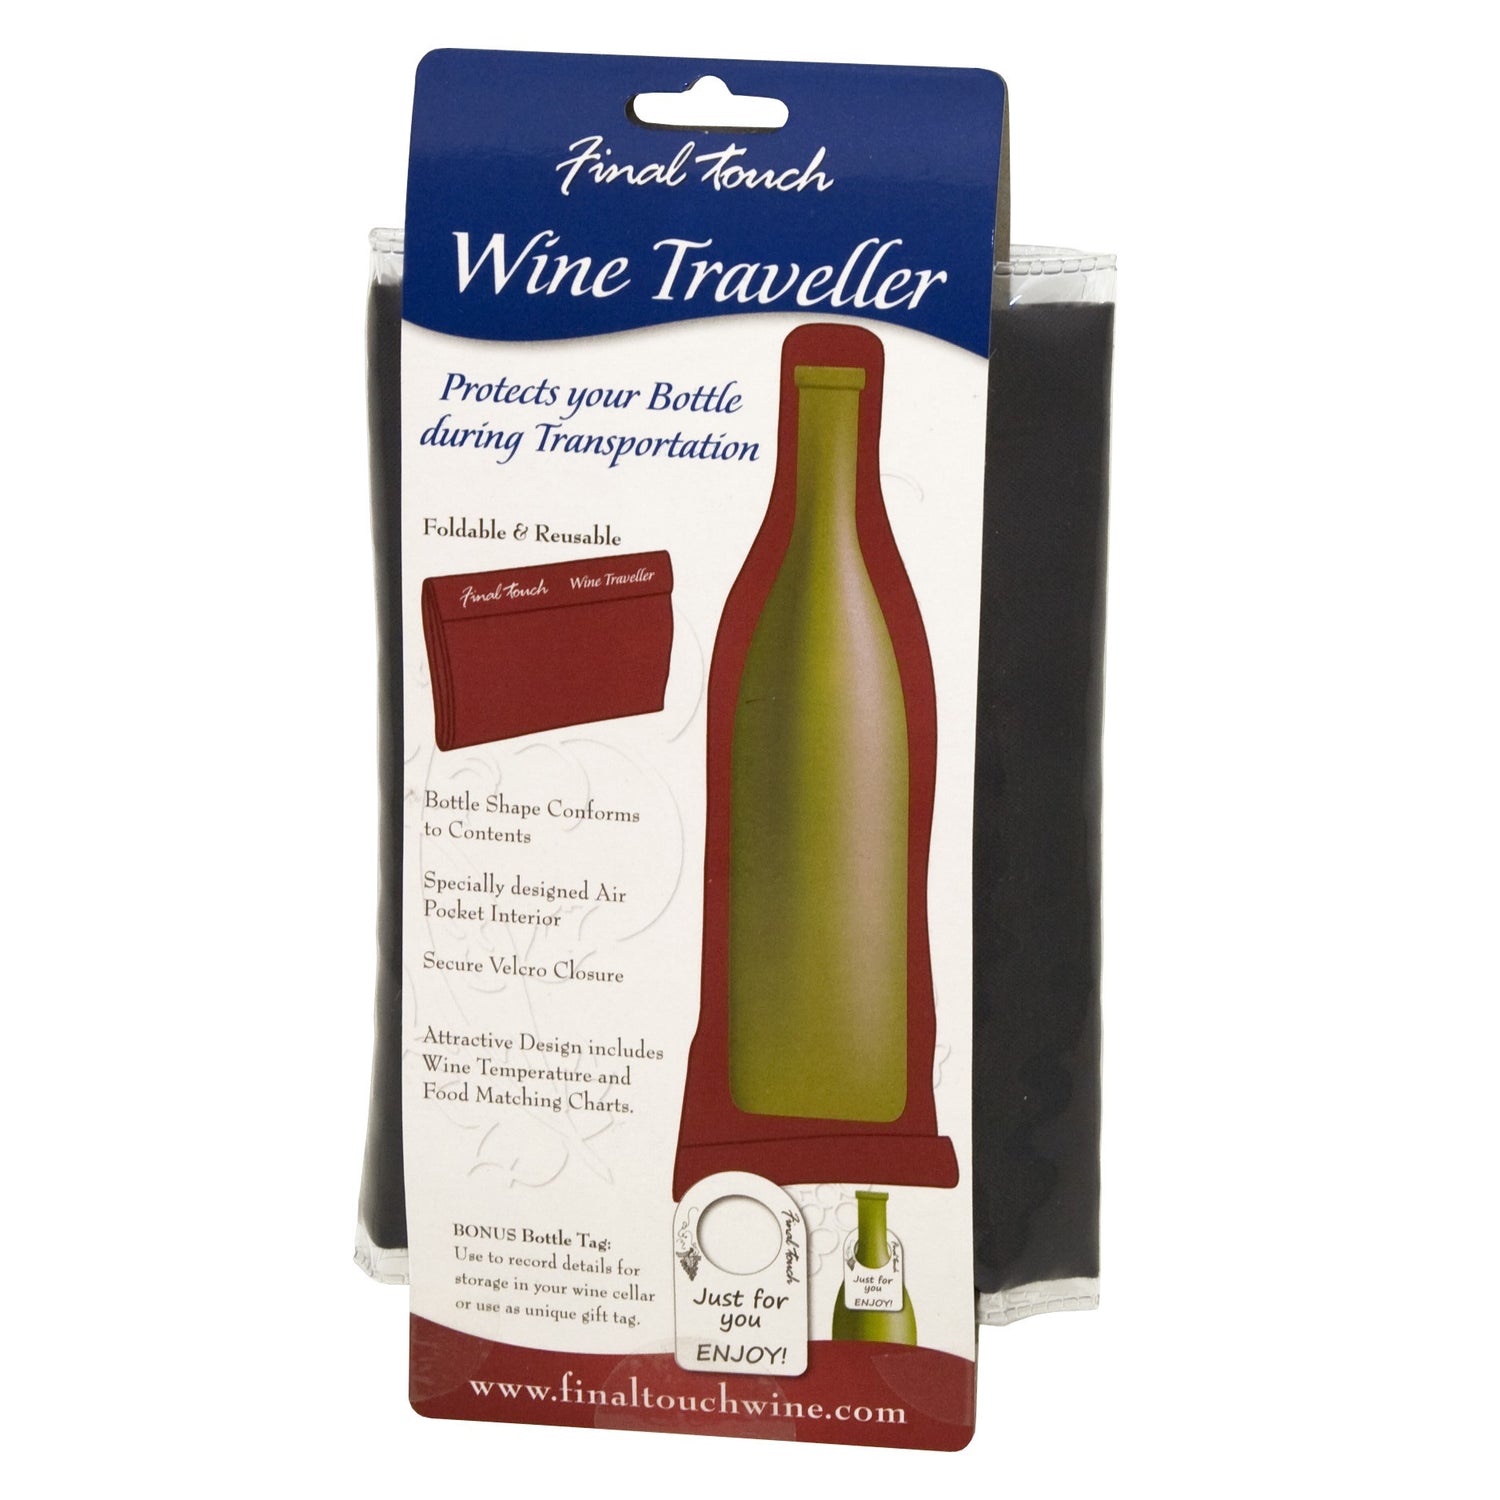 Wine Traveller